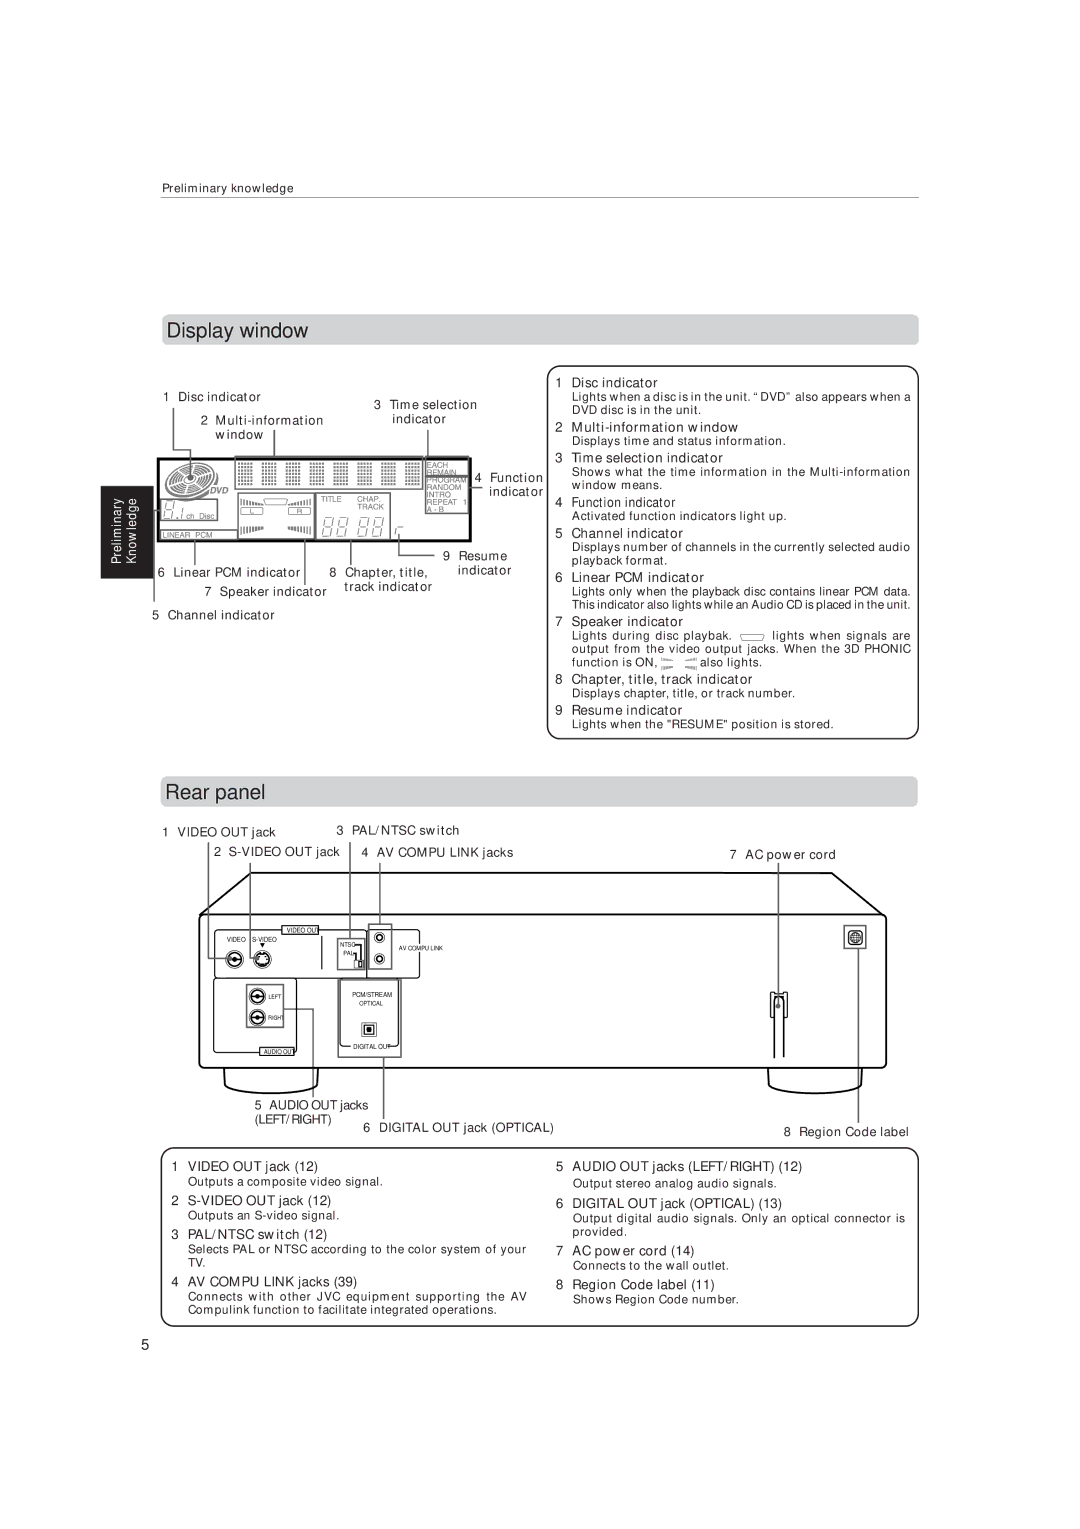 JVC XV-515GD manual Display window, Rear panel 